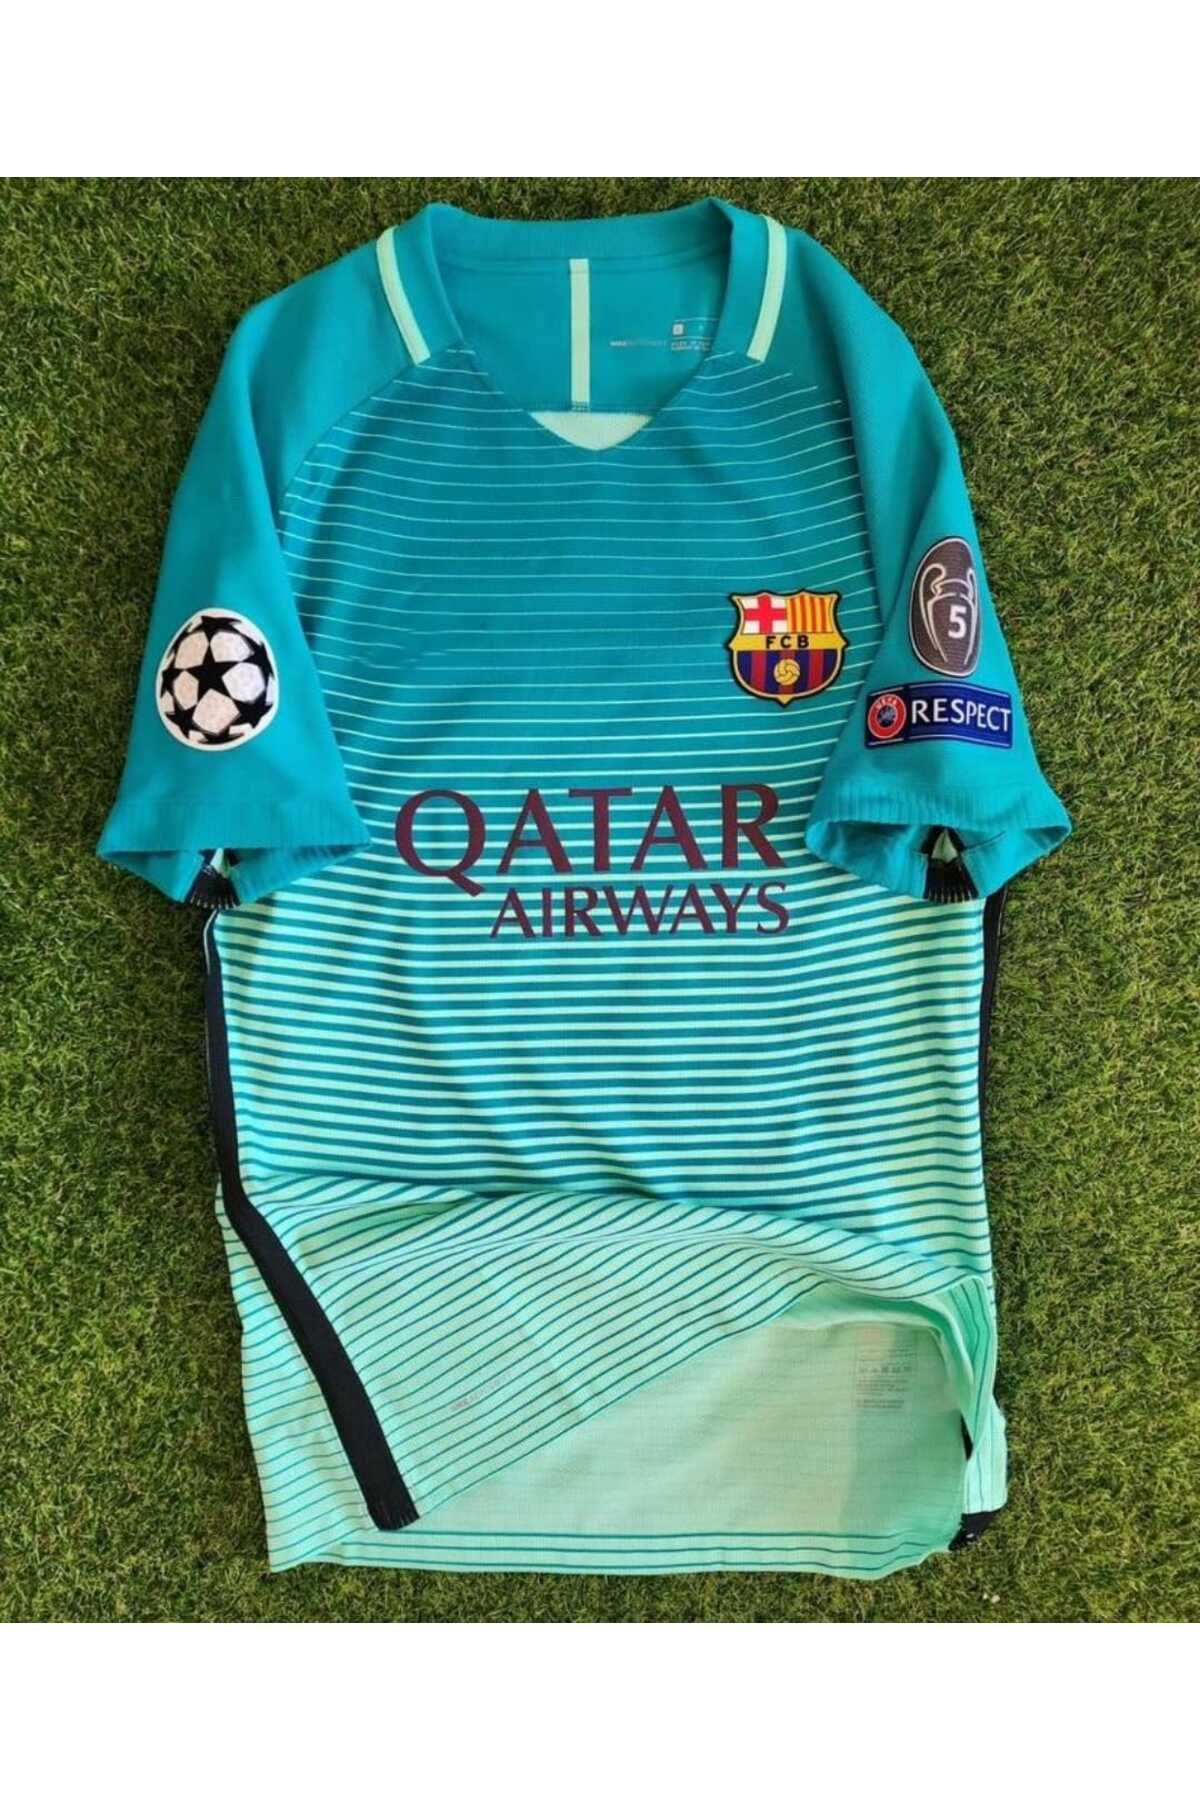 AJAX STAR Barcelona 2015/16 Lionel Messi Nostalji Forması